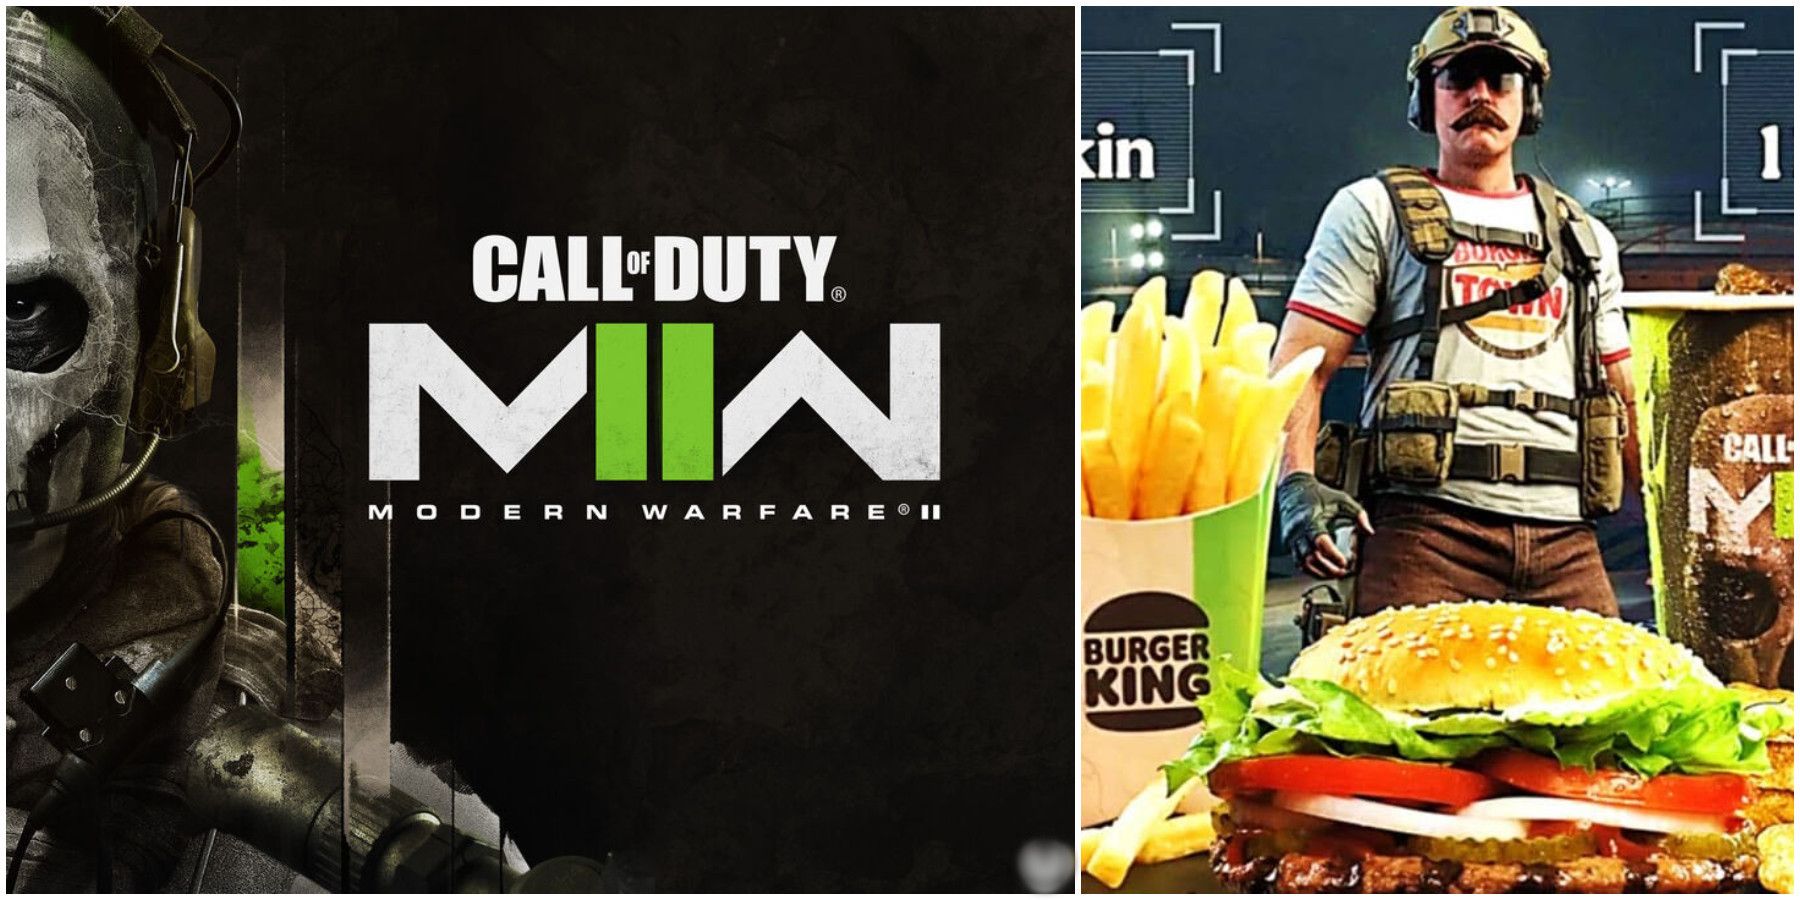 Call-of-Duty-Modern-Warfare-2-Burger-King-Deal-1